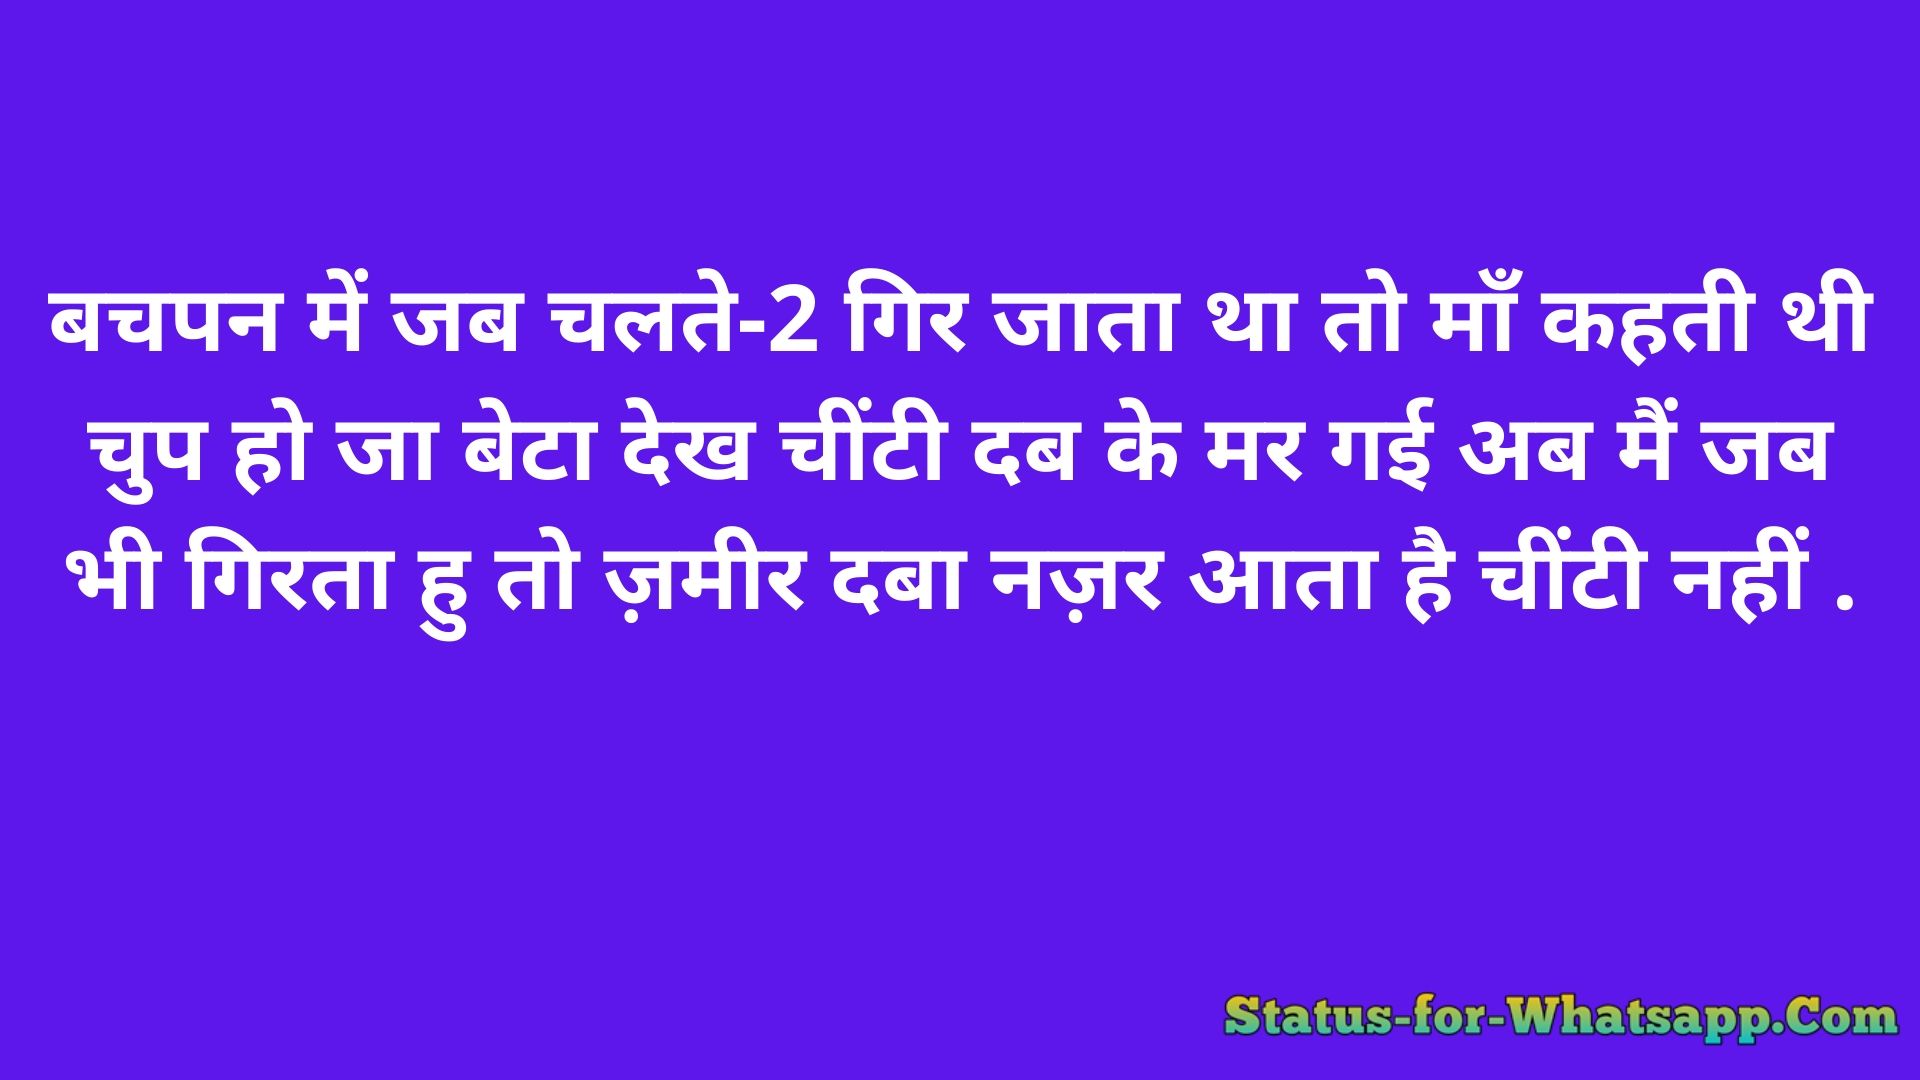 Family Status, family status for whatsapp in hindi,status for family in hindi, family status in hindi for whatsapp